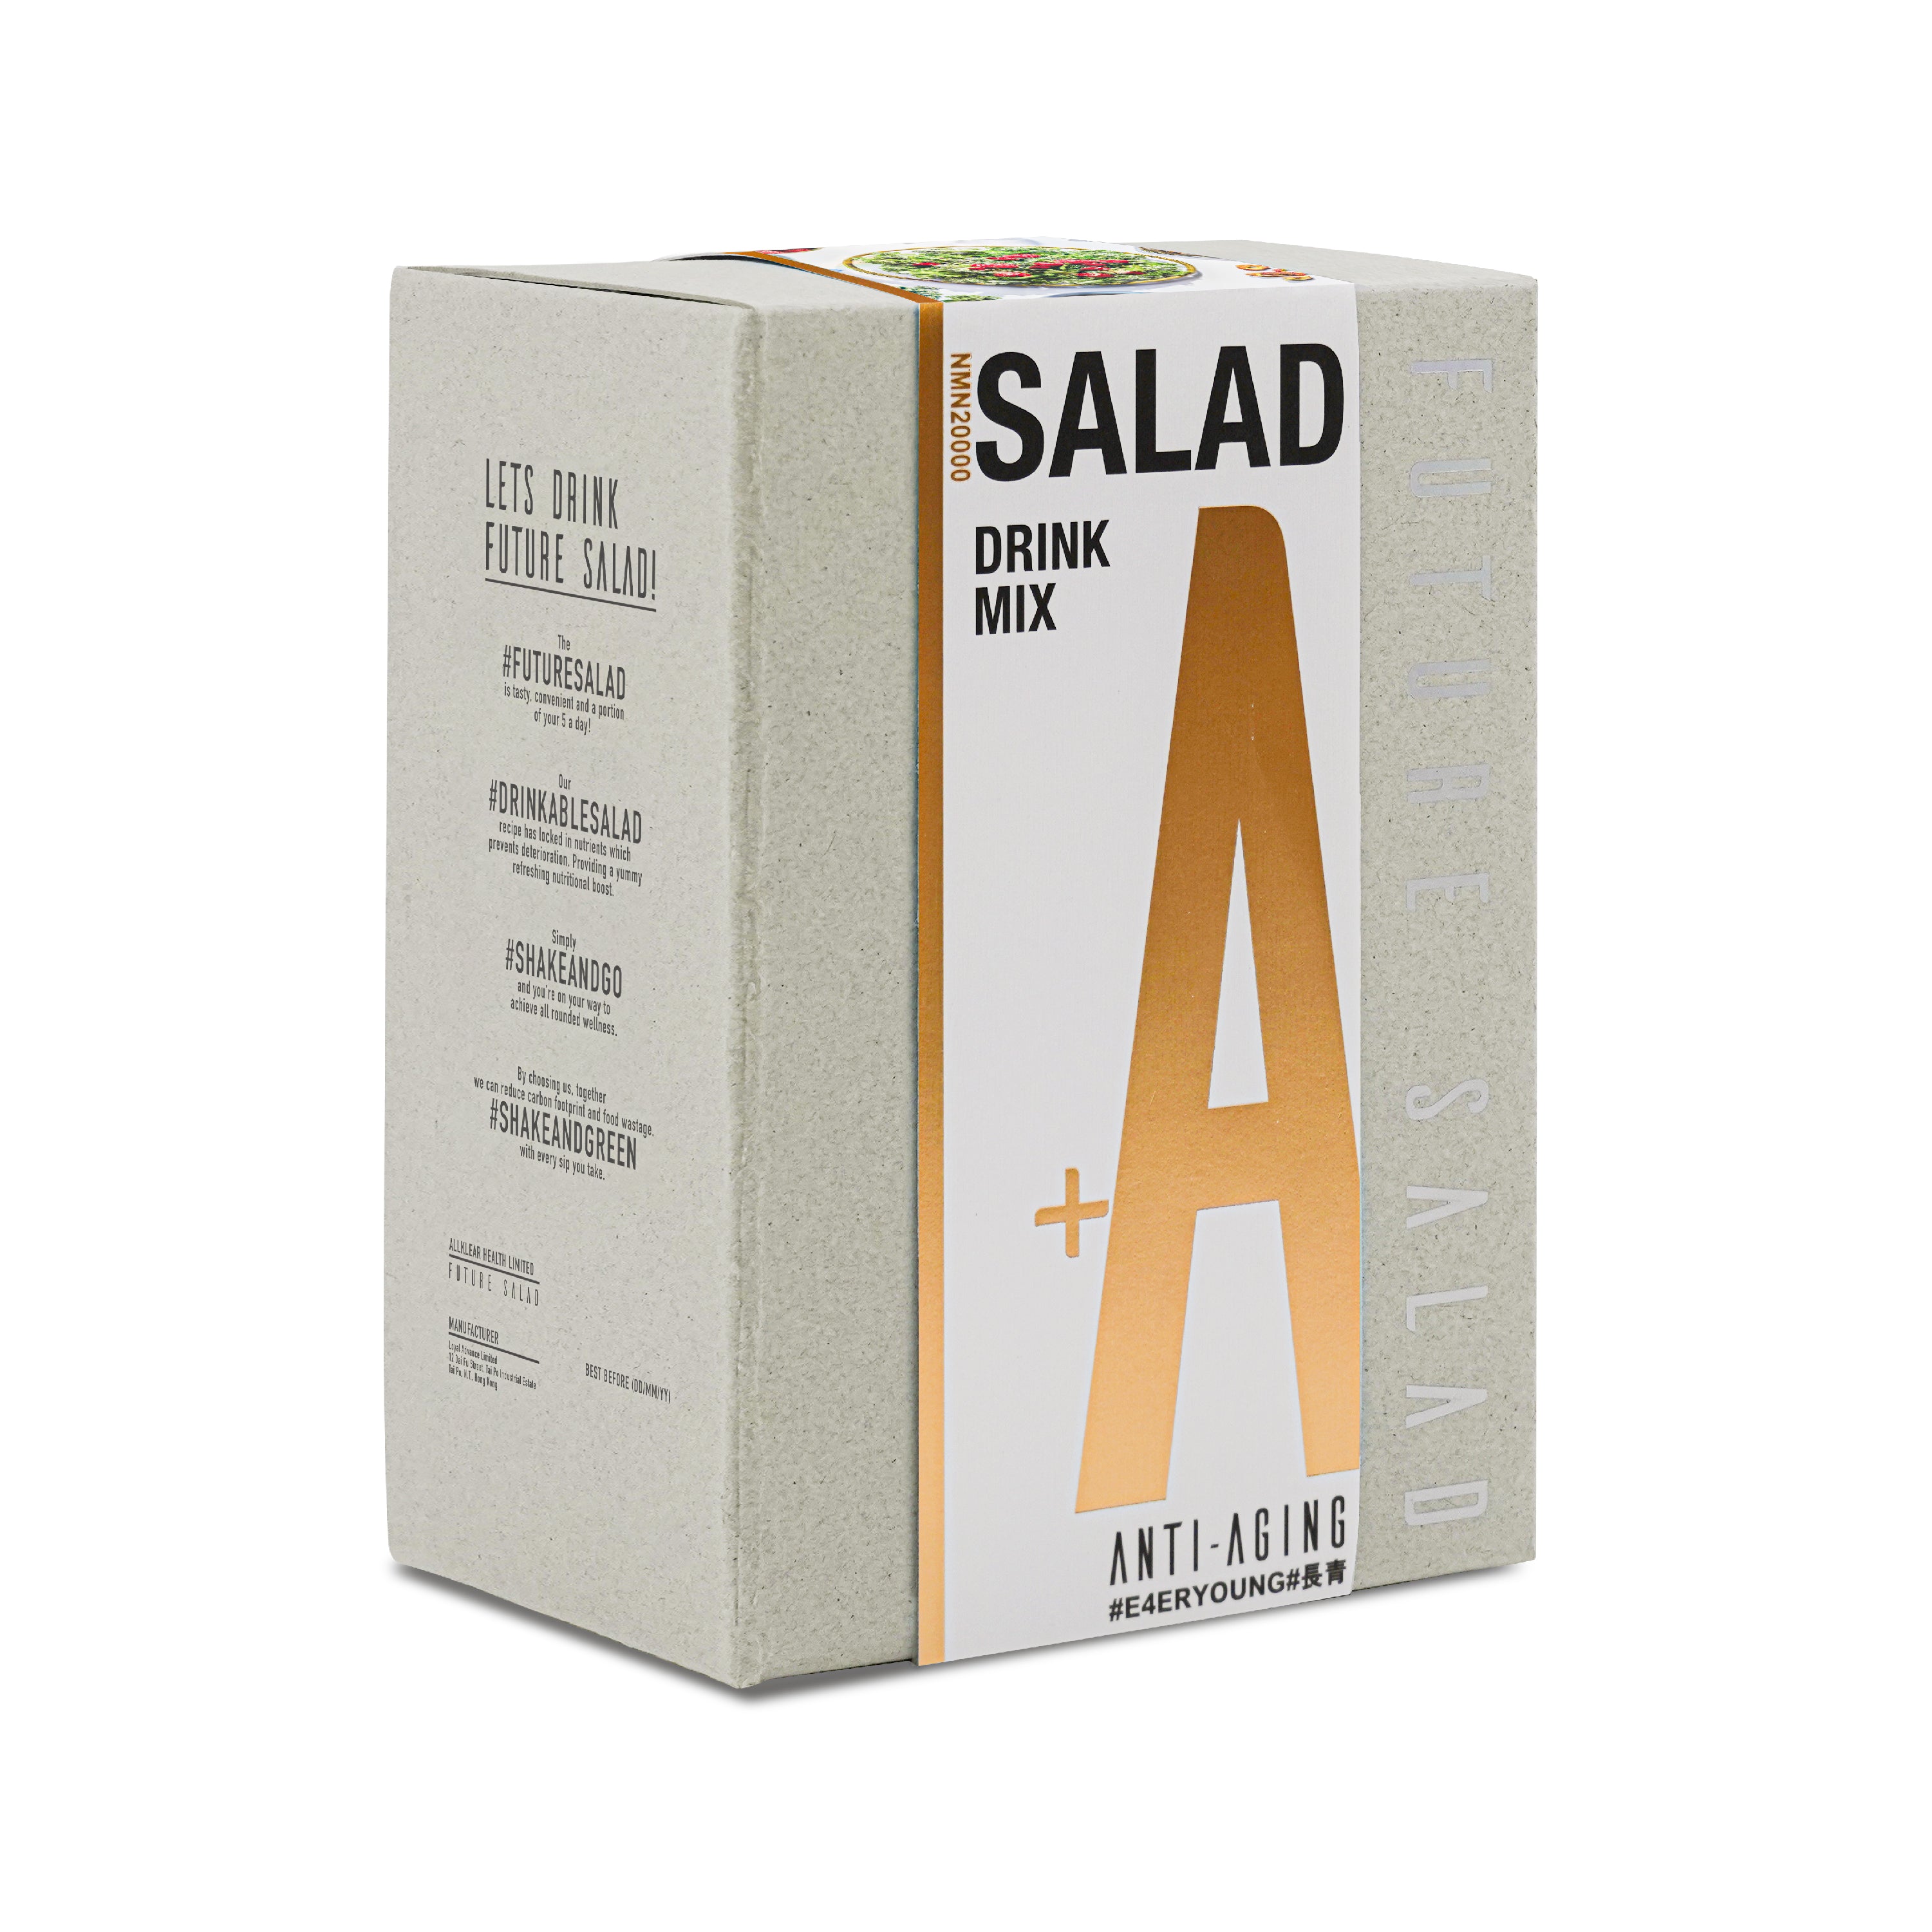 Lets Drink Future Salad | 凍齡新沙律 (NMN20000) Anti-Aging Salad Drink Mix 30包裝 | Future Salad